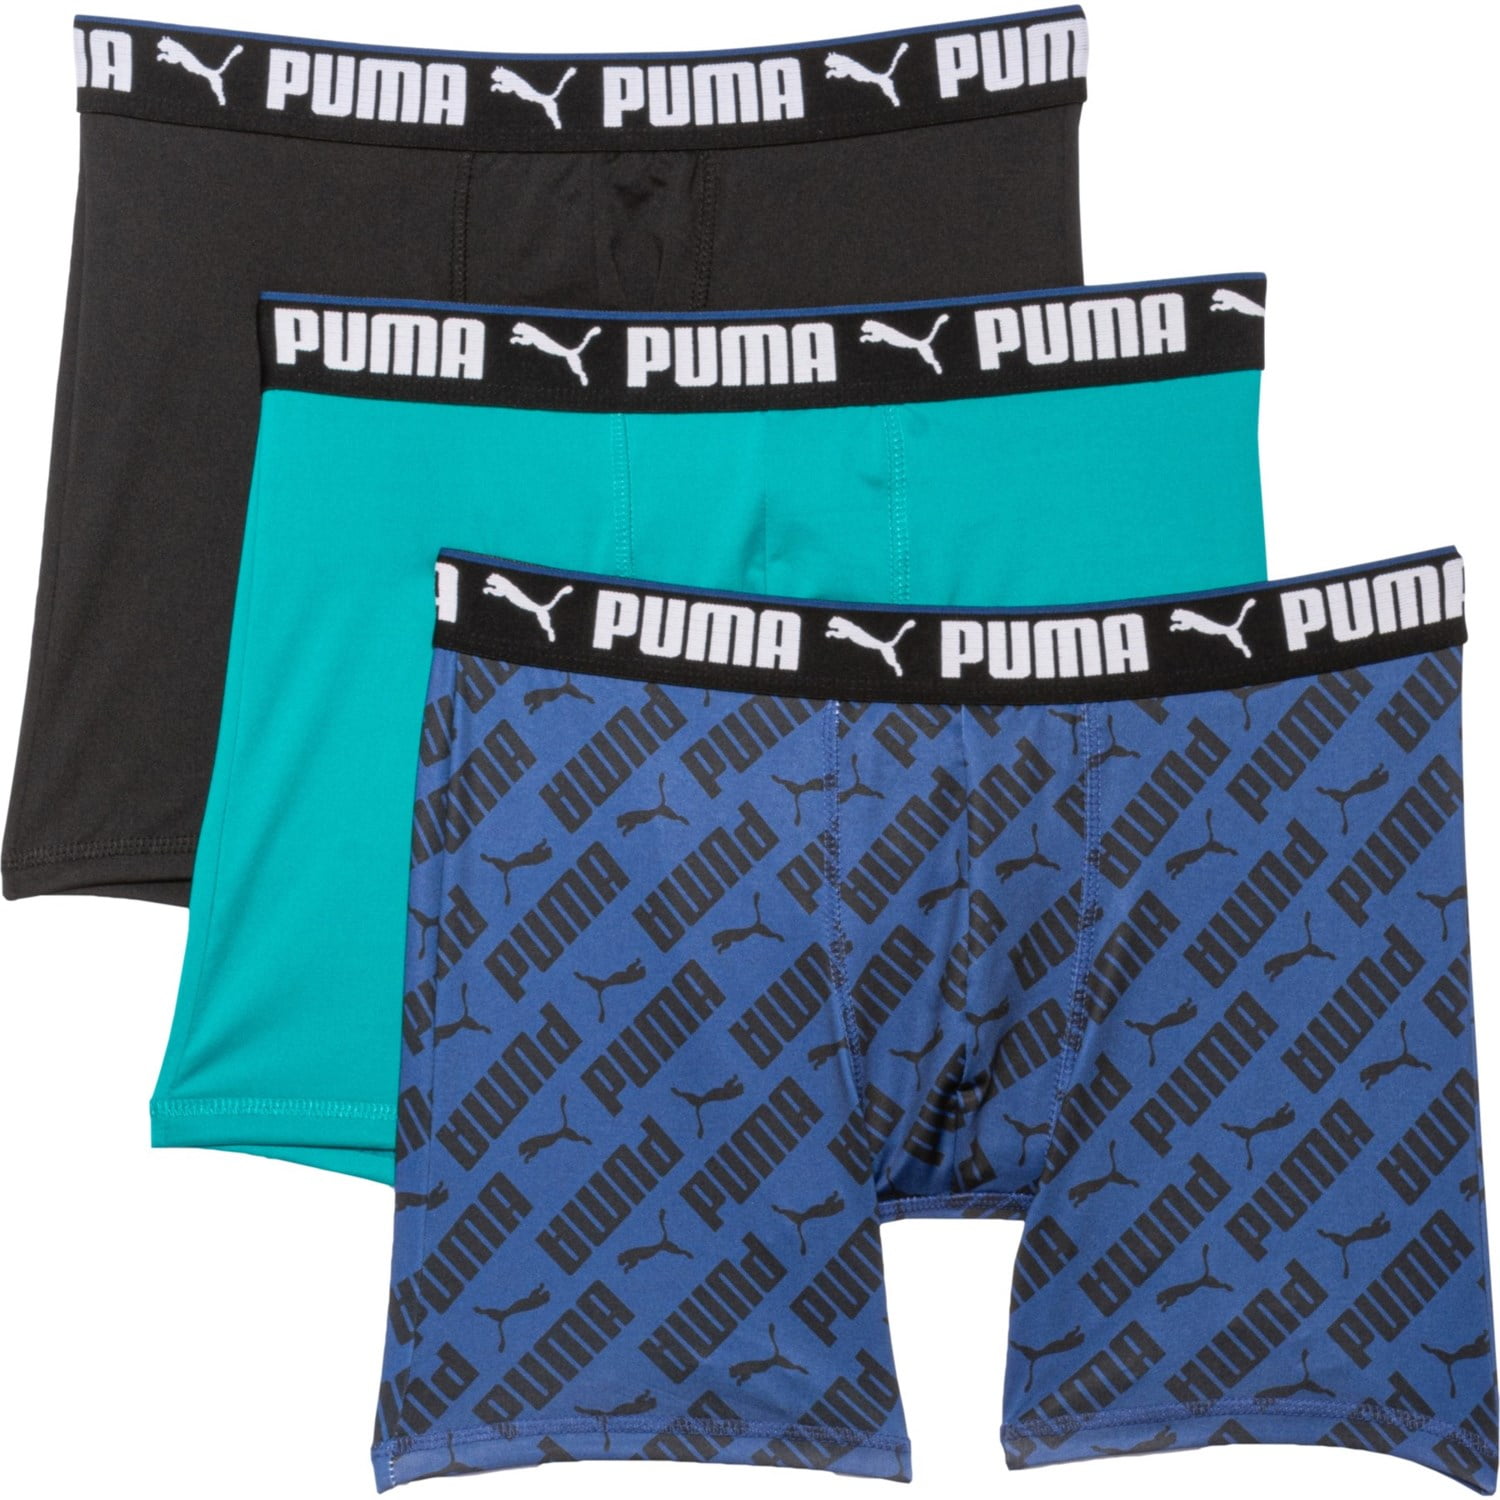 PUMA MEN'S 3 PACK - PHG BLUE LETTER XLARGE - BOXER BRIEF UNDERWEAR